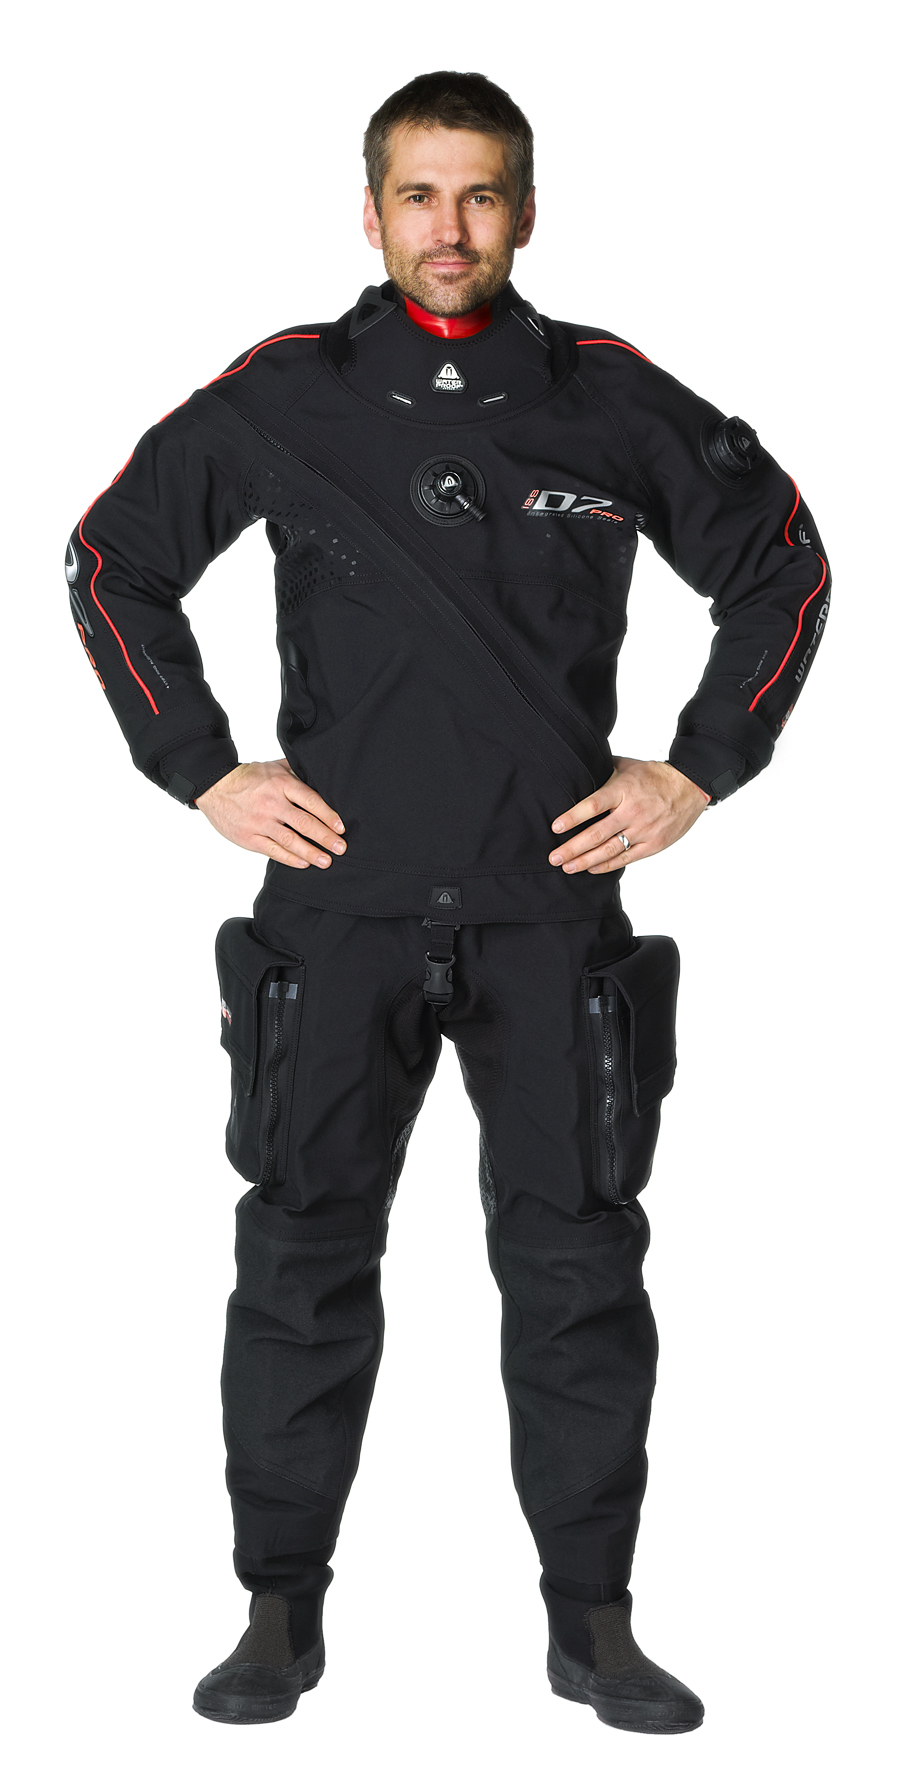 Сухой гидрокостюм Waterproof D7 Pro ISS мужской